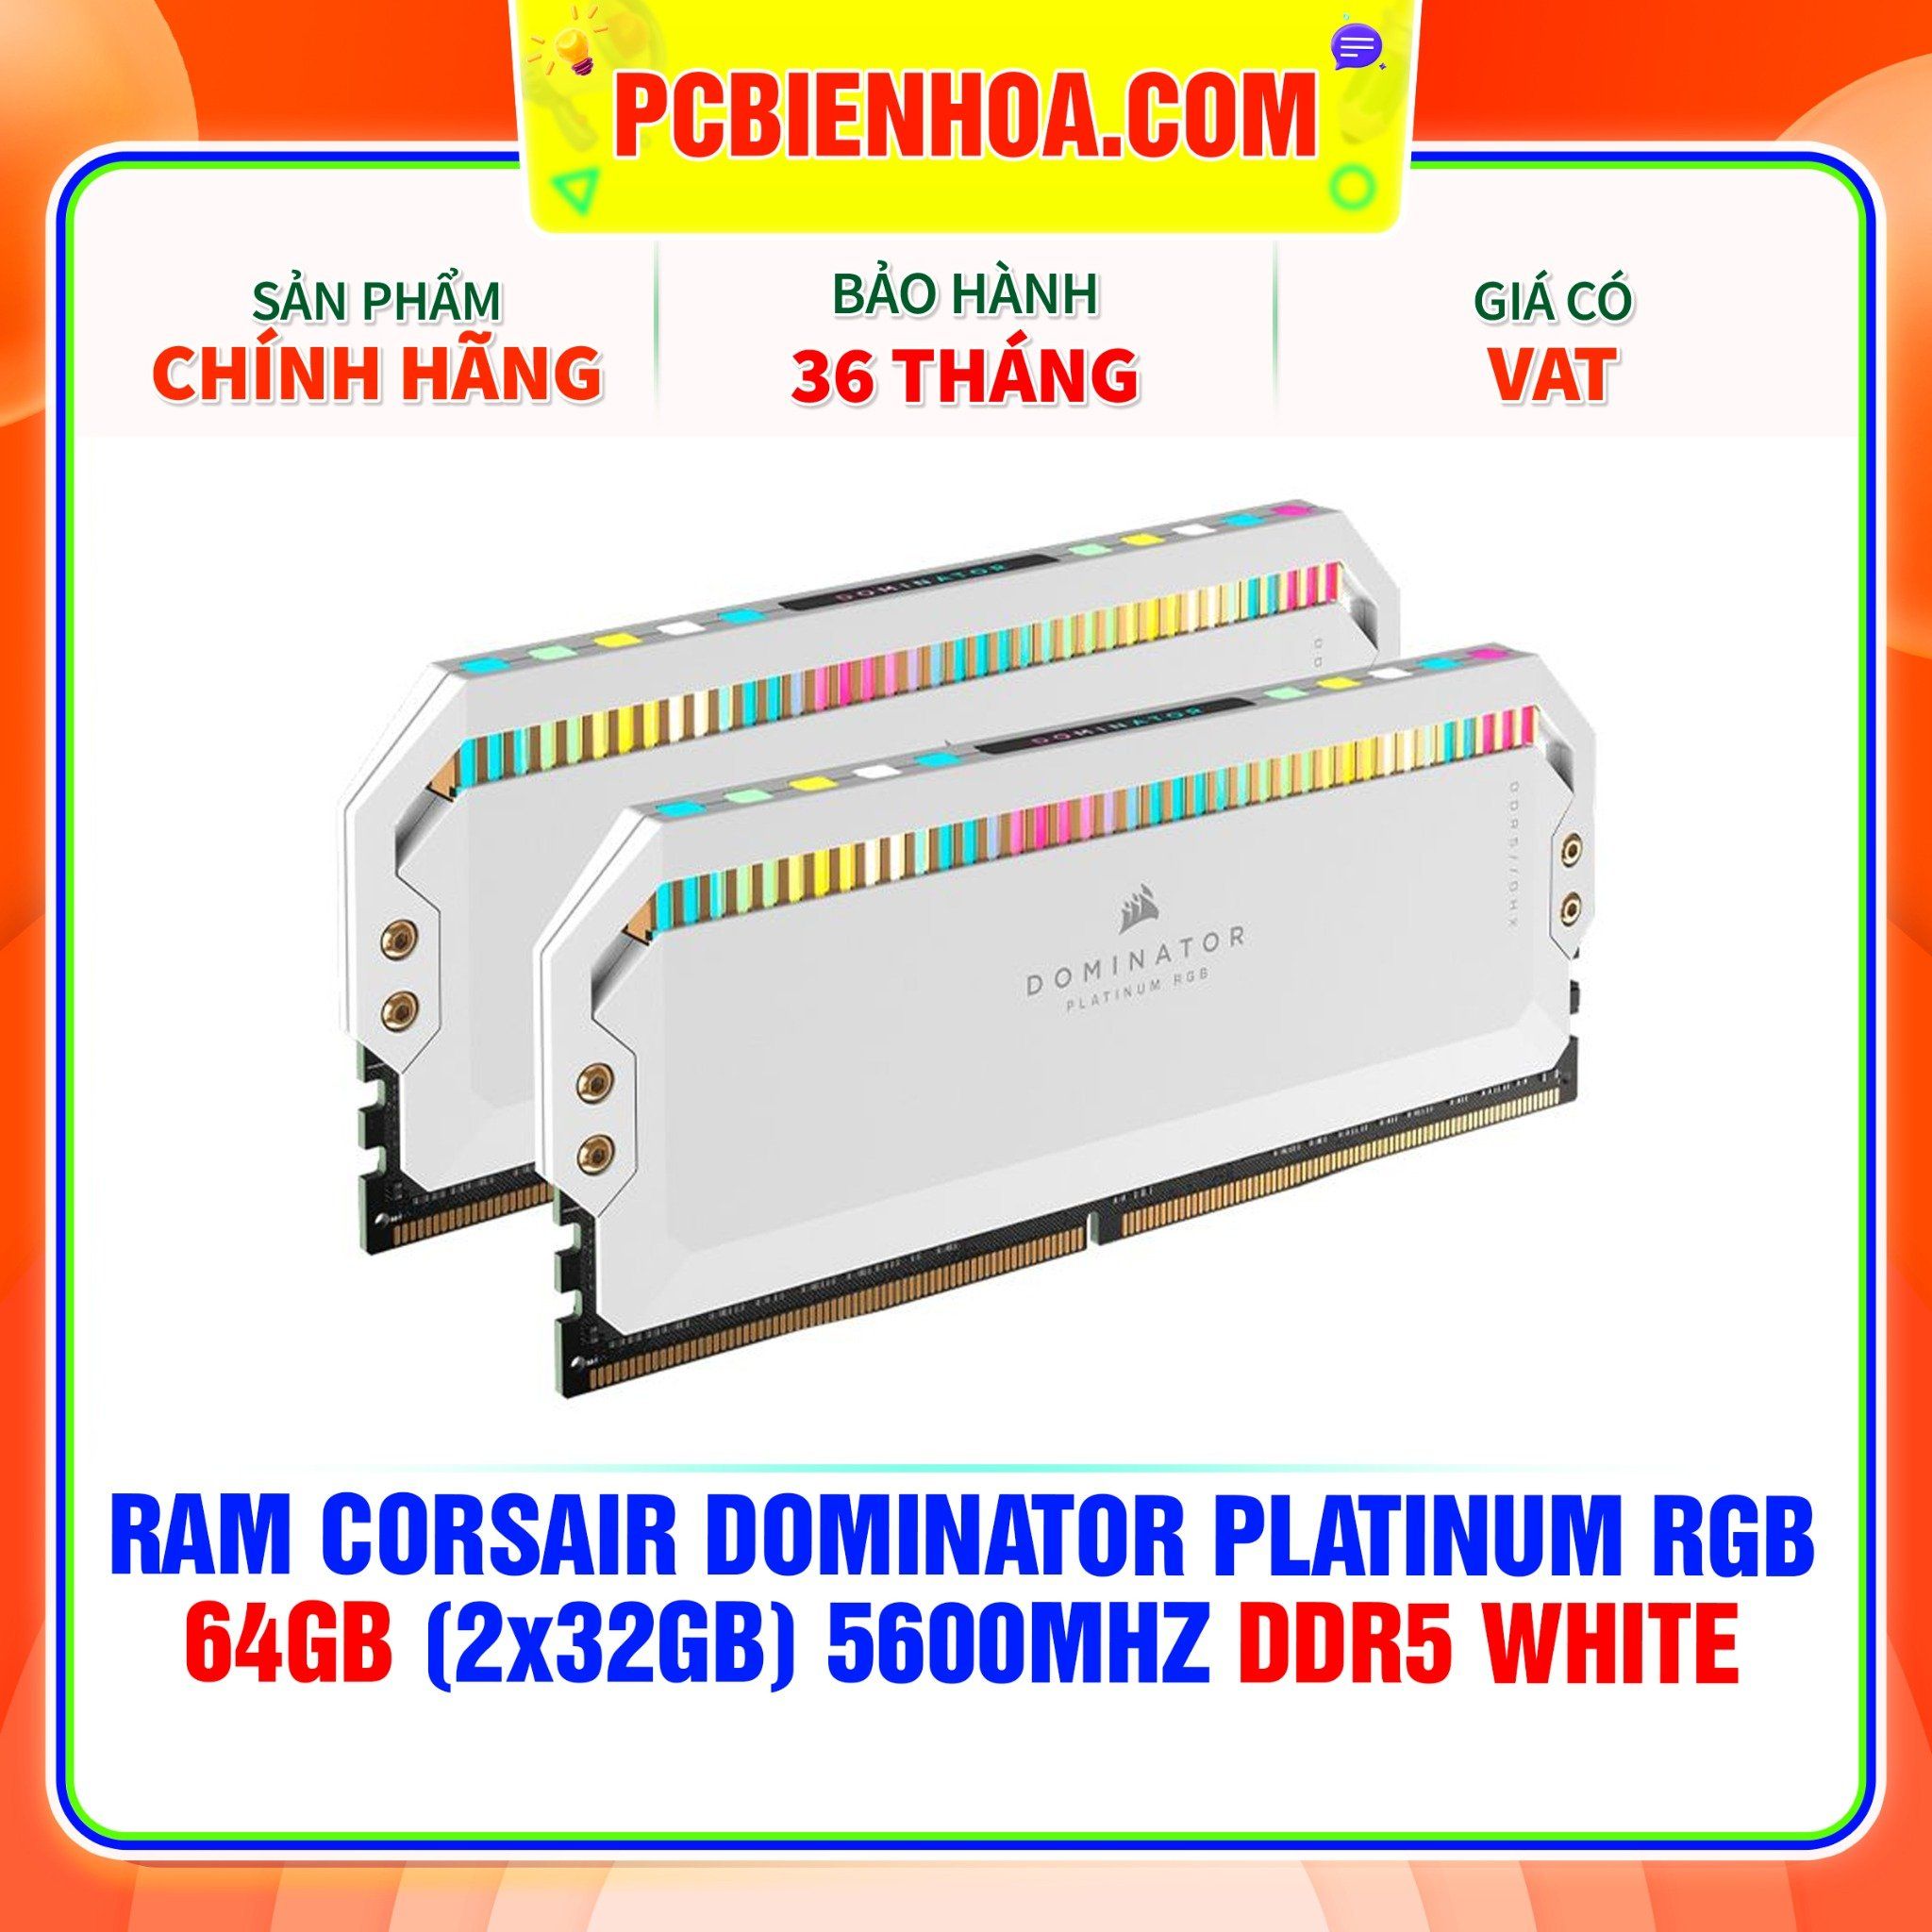  RAM CORSAIR DOMINATOR PLATINUM RGB 64GB (2x32GB) 5600MHZ DDR5 WHITE 